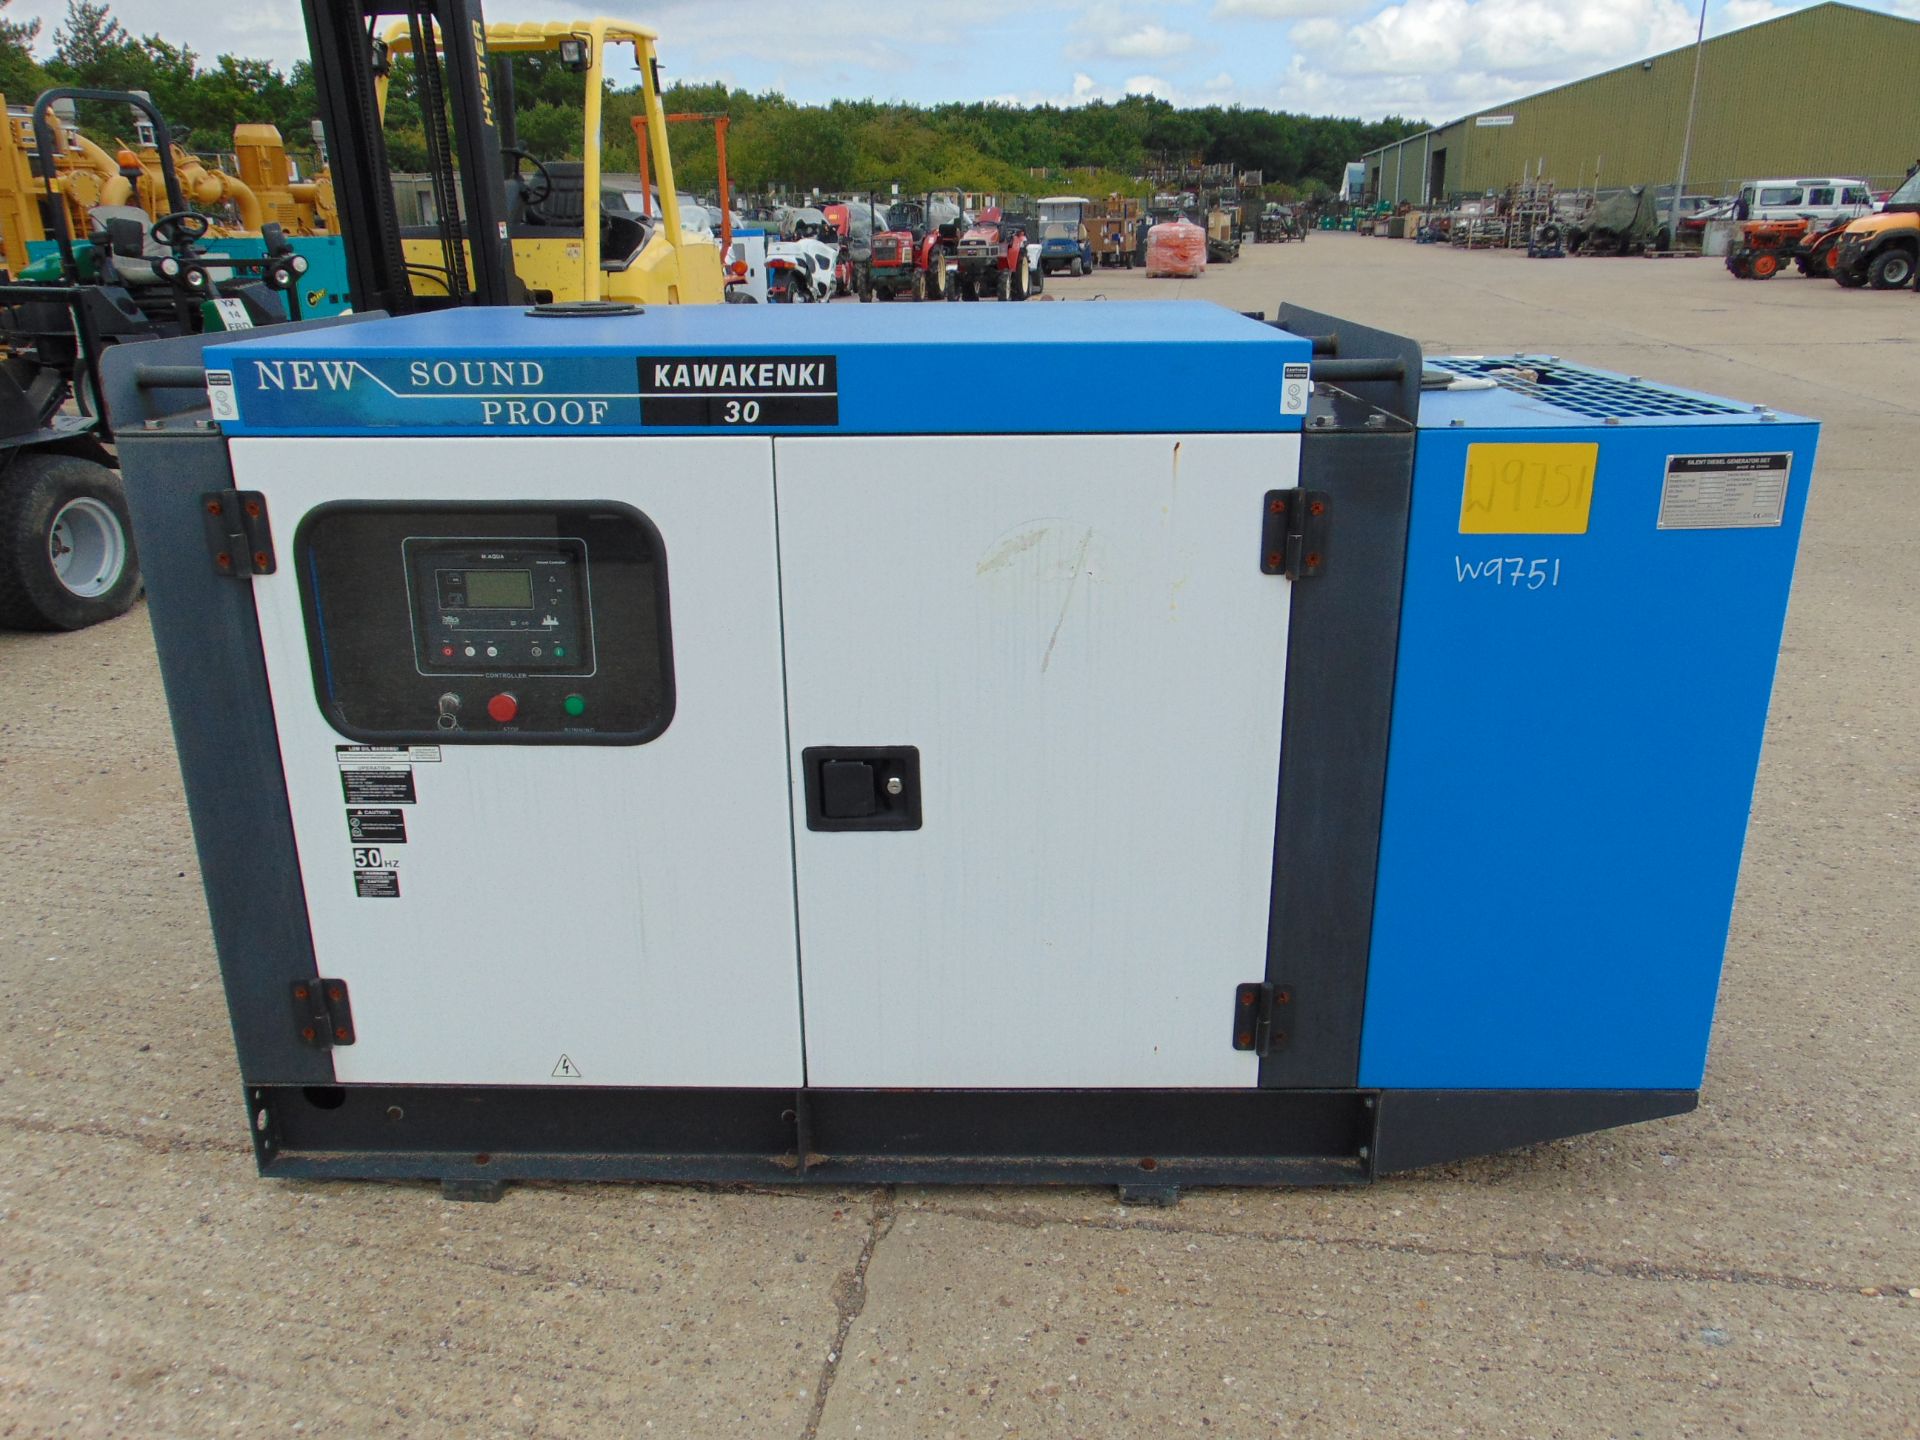 UNISSUED 30 KVA 3 Phase Silent Diesel Generator Set. This generator is 3 phase 230 / 400 Volt